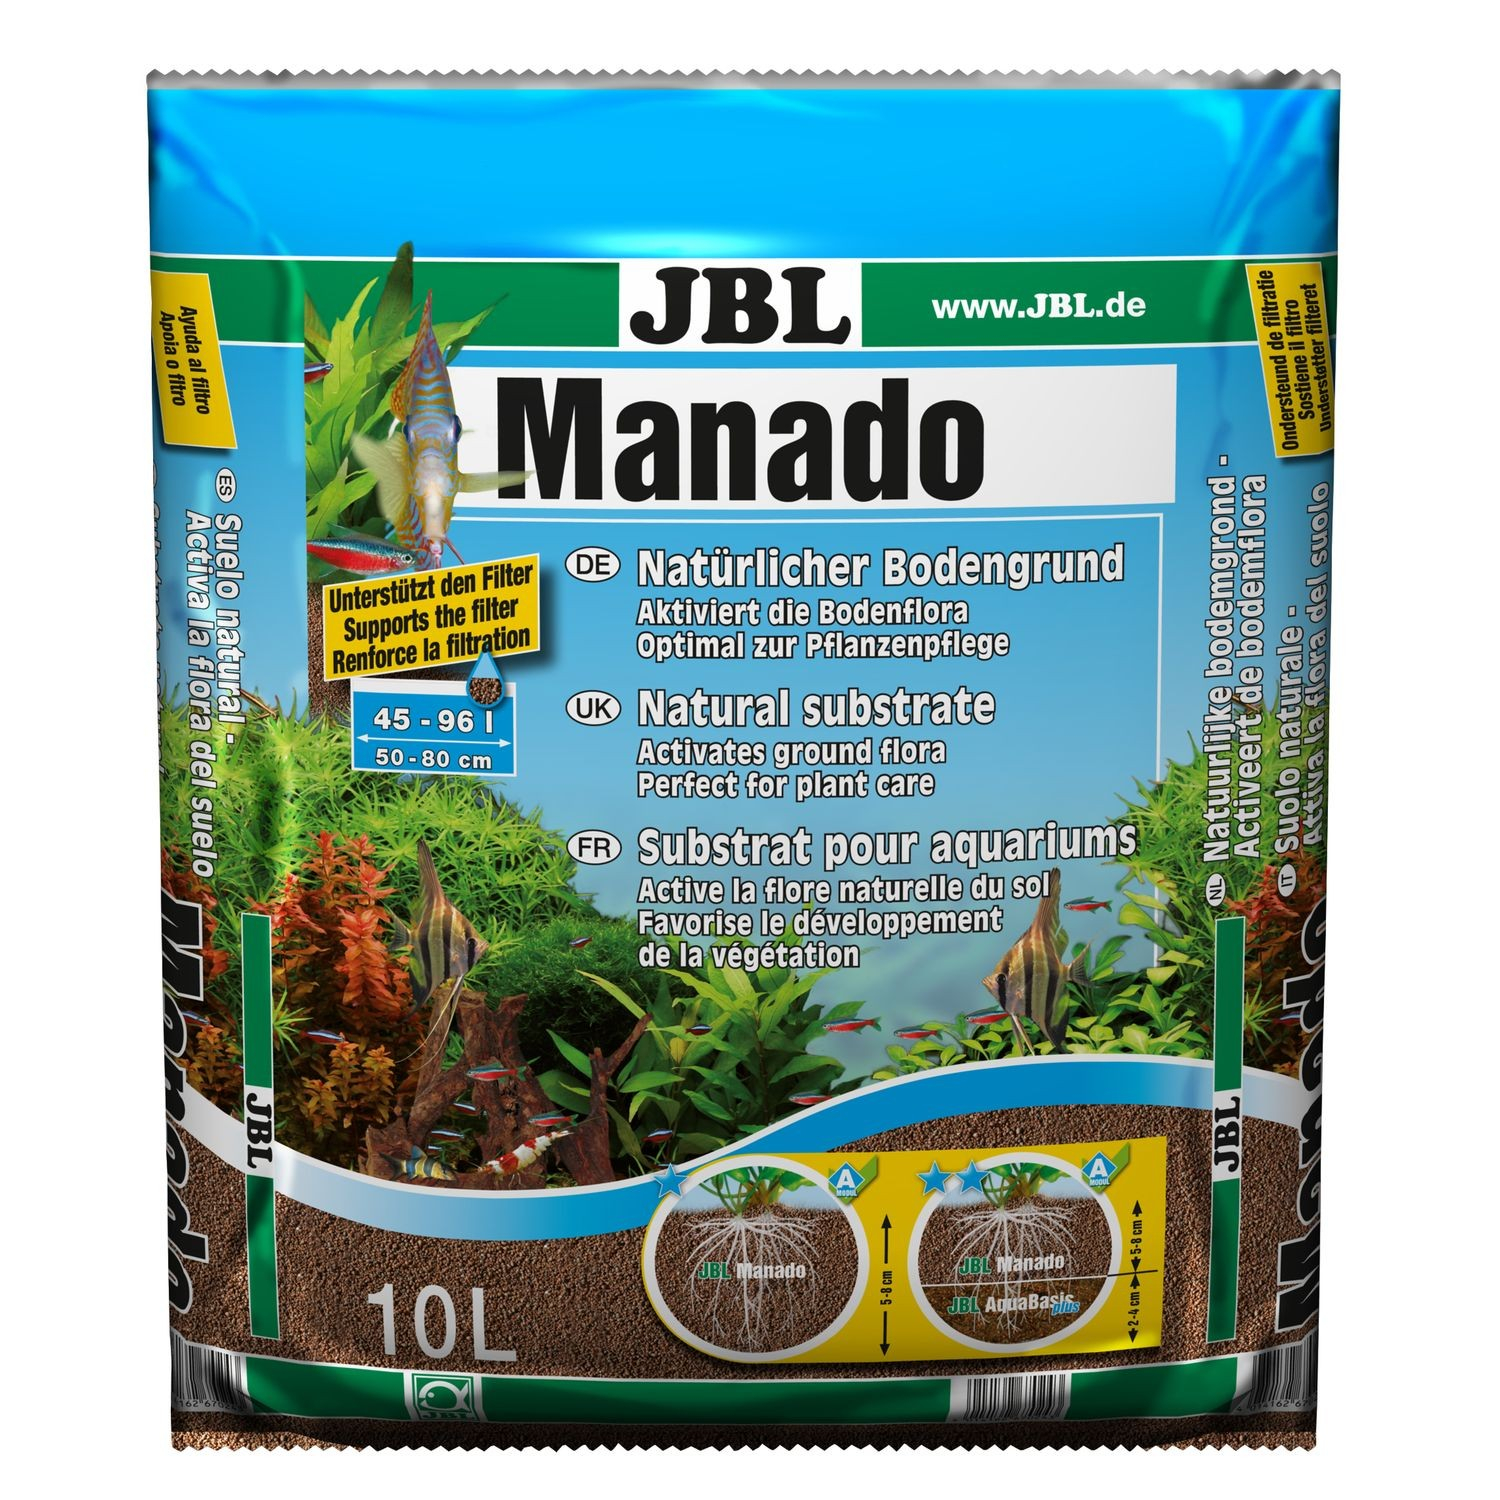 JBL Manado Substrato naturale per acquario